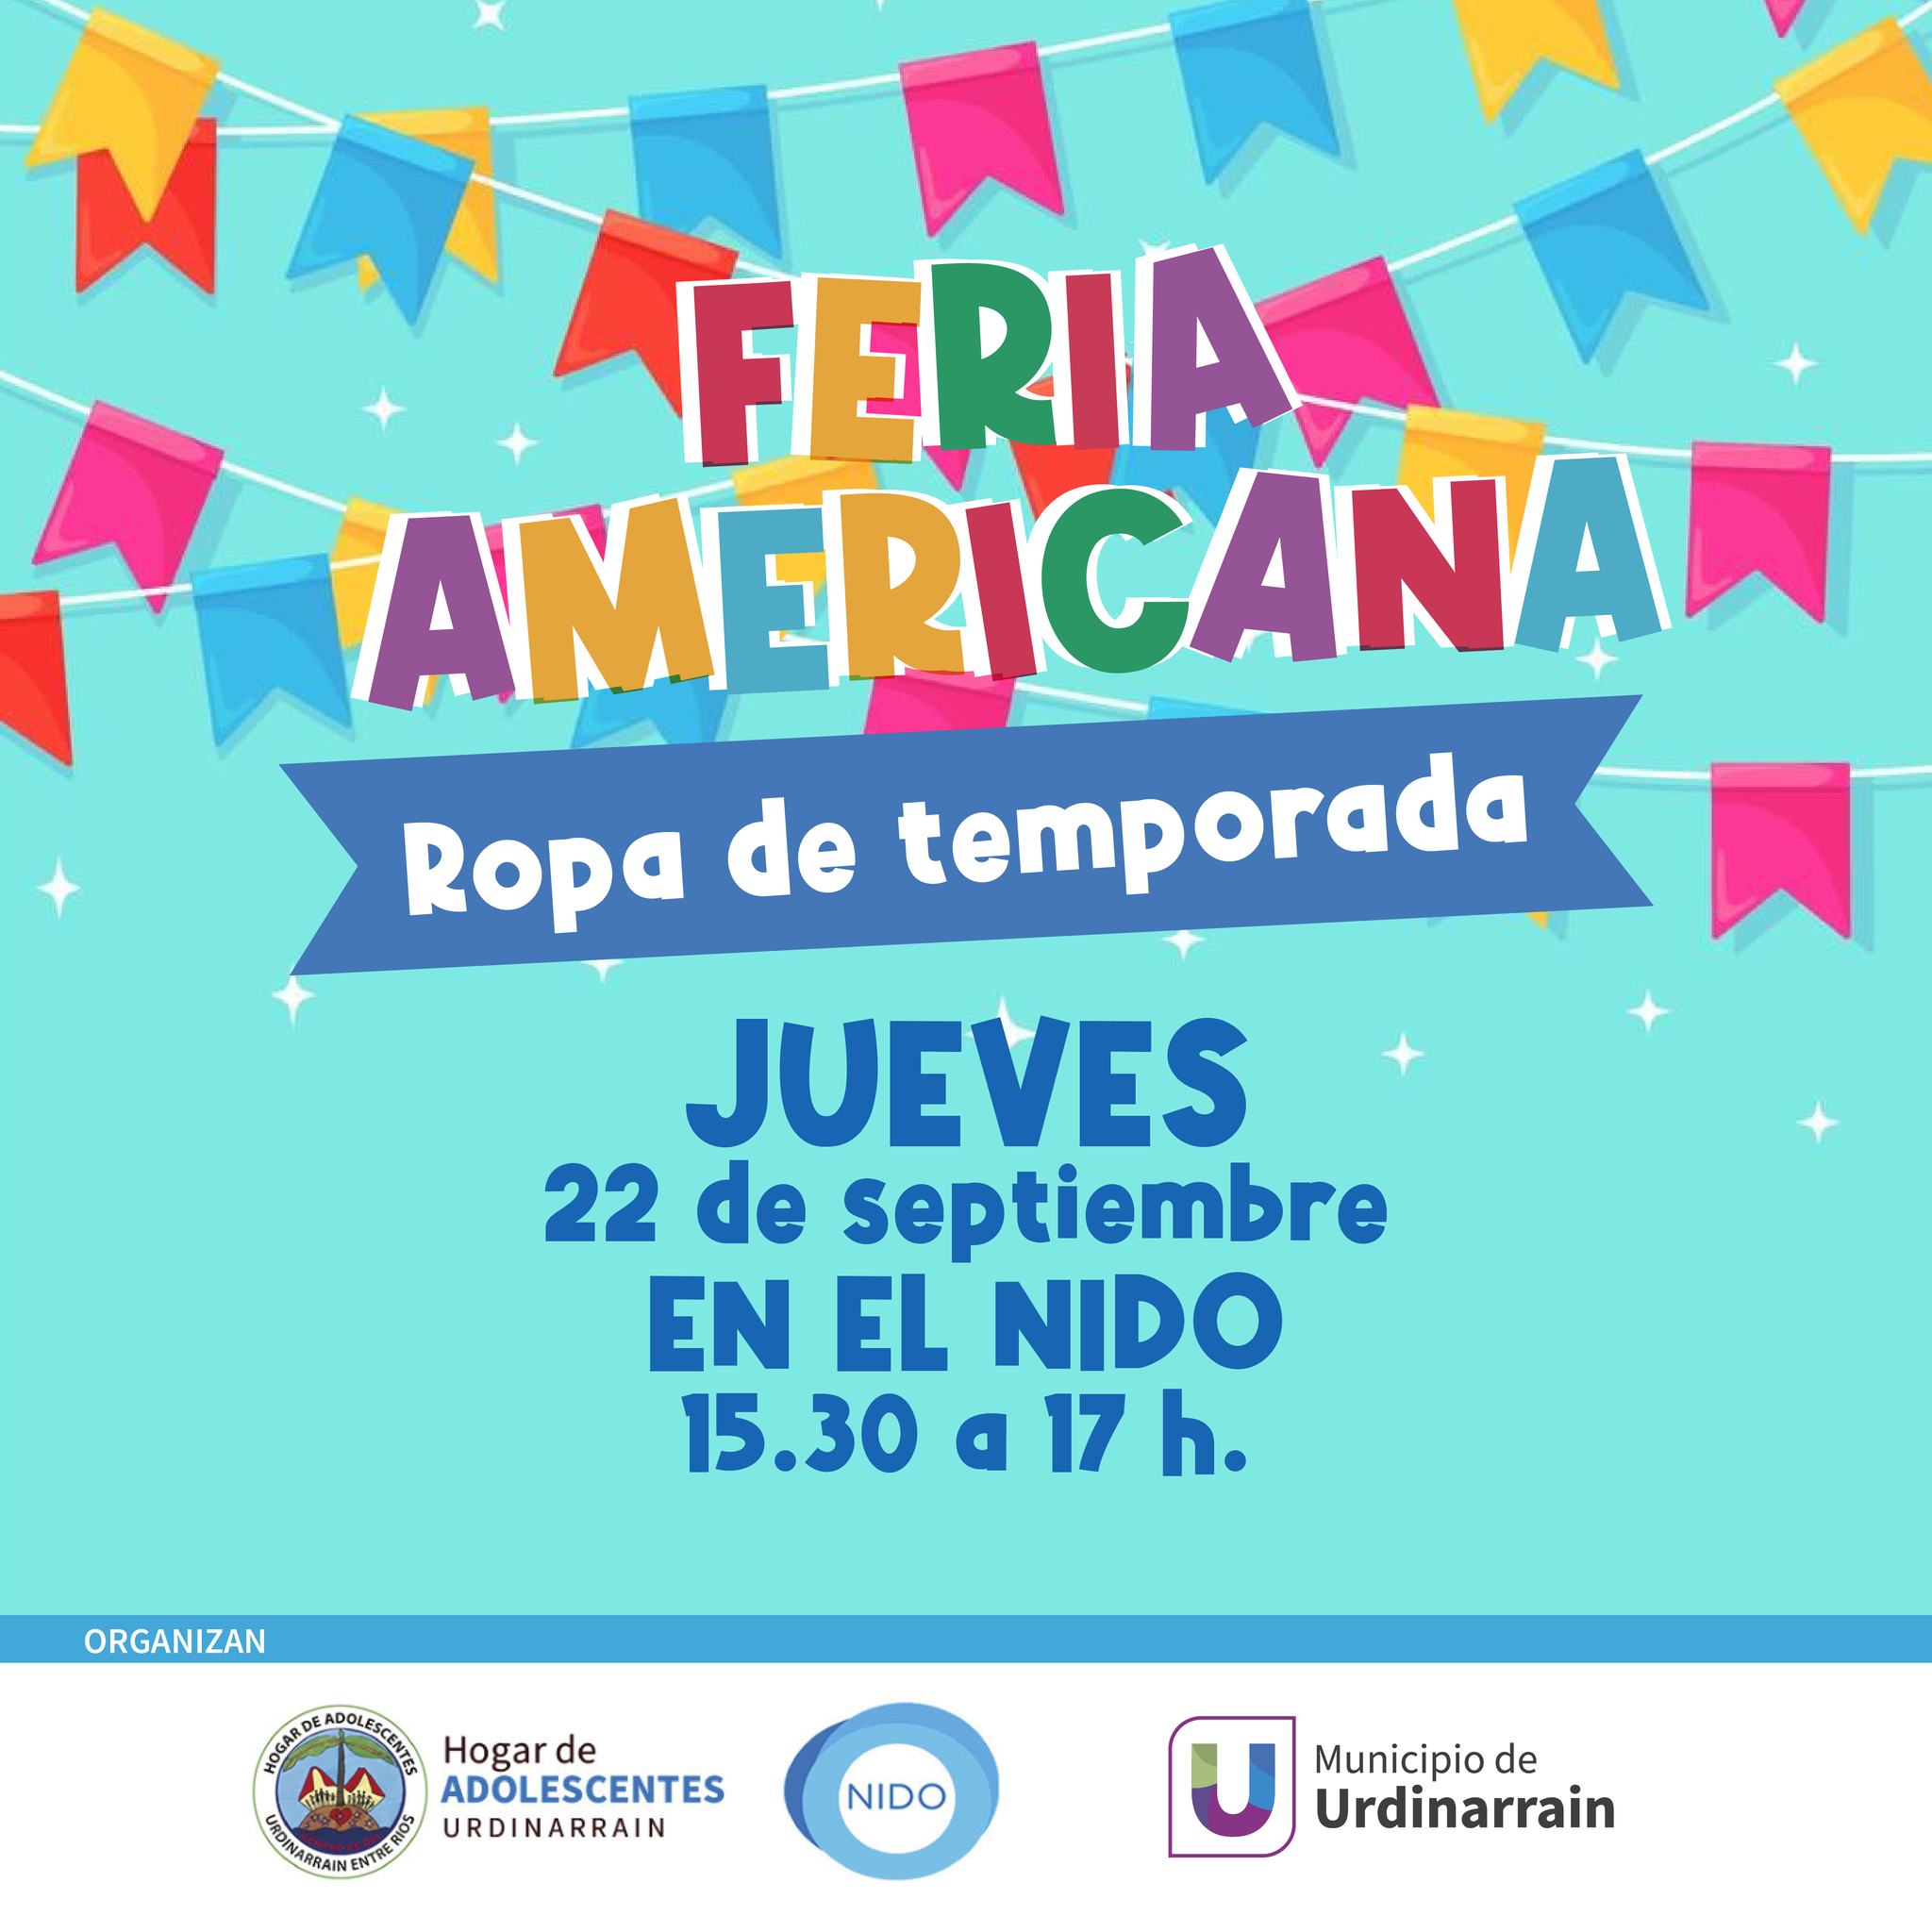 Nuevo encuentro de Feria Americana – Municipio de Urdinarrain